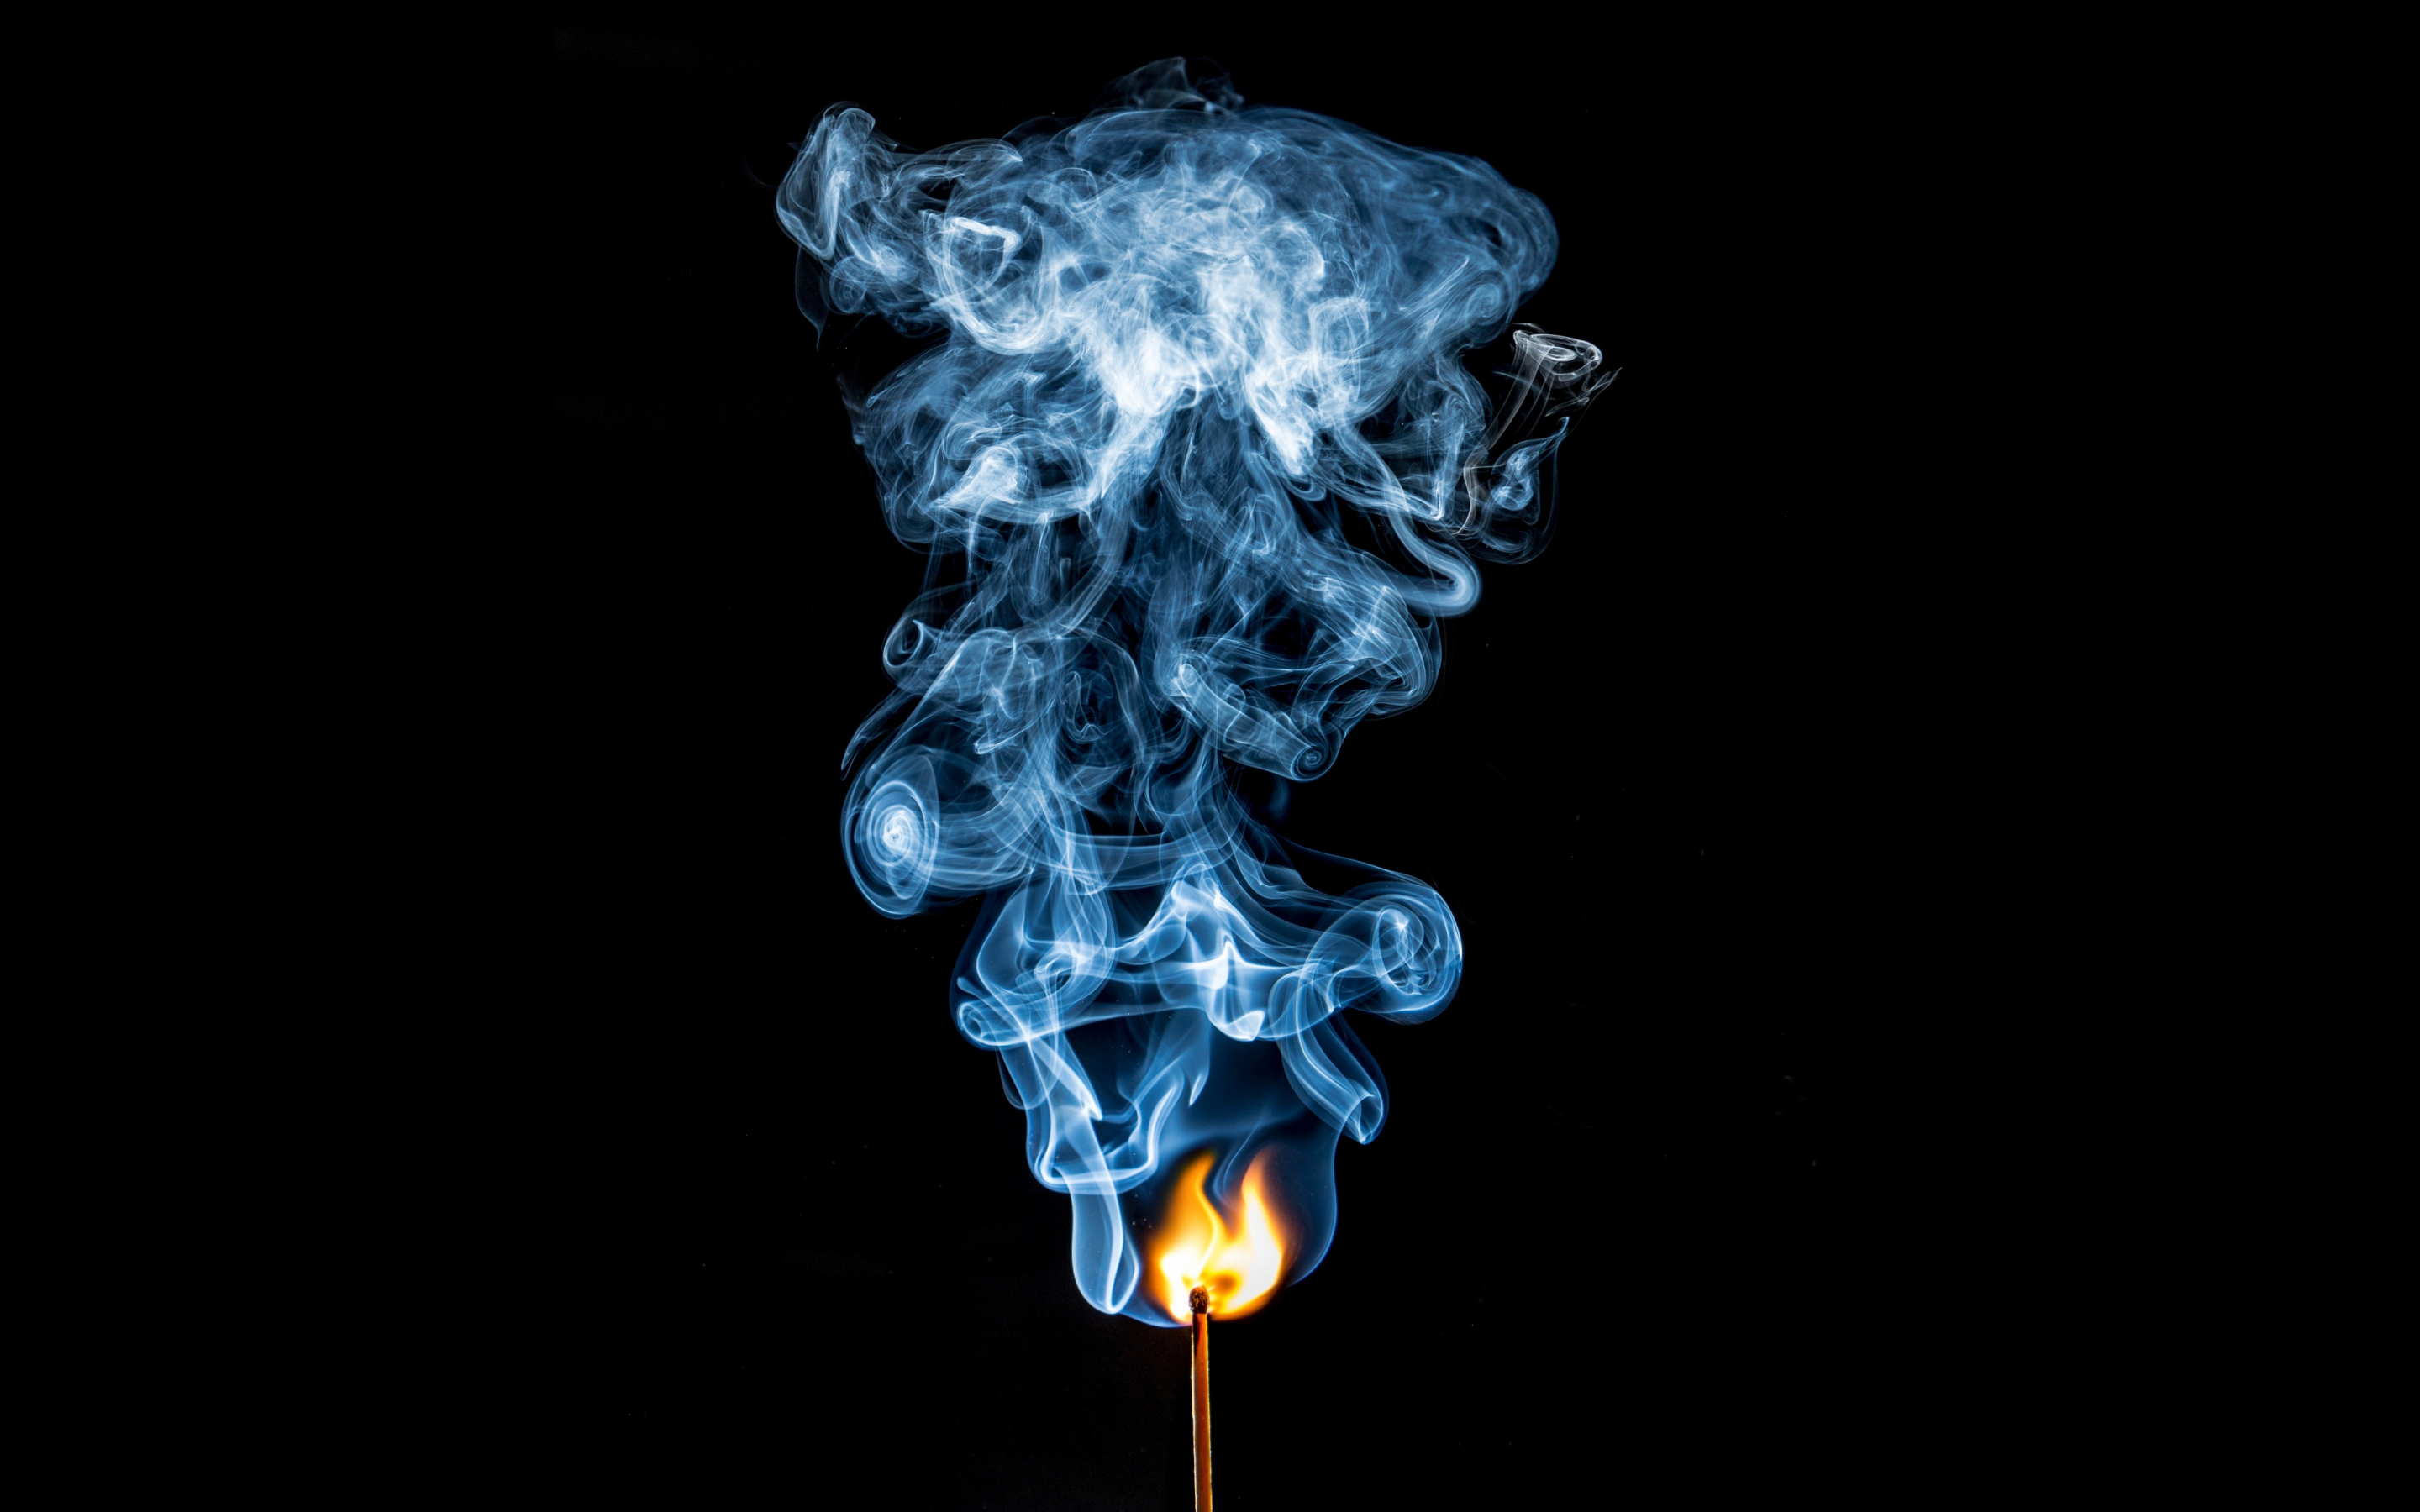 Matches, fire, smoke, 2880x1800 wallpaper